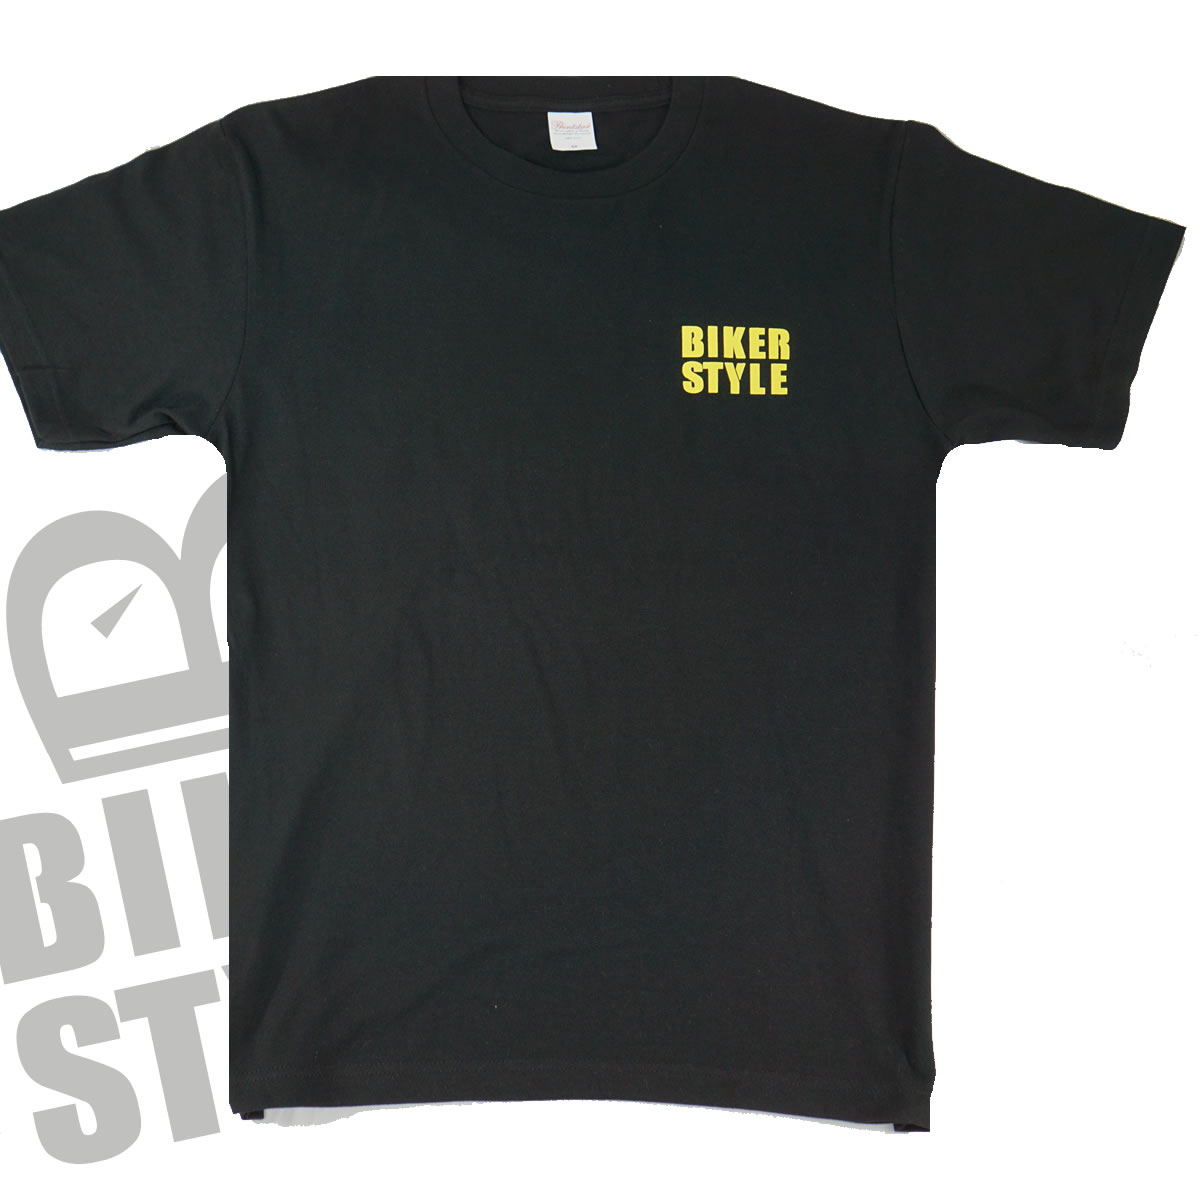 BIKER STYLE / 1200R BIKER STYLE オリジナルデザイン Tシャツ 